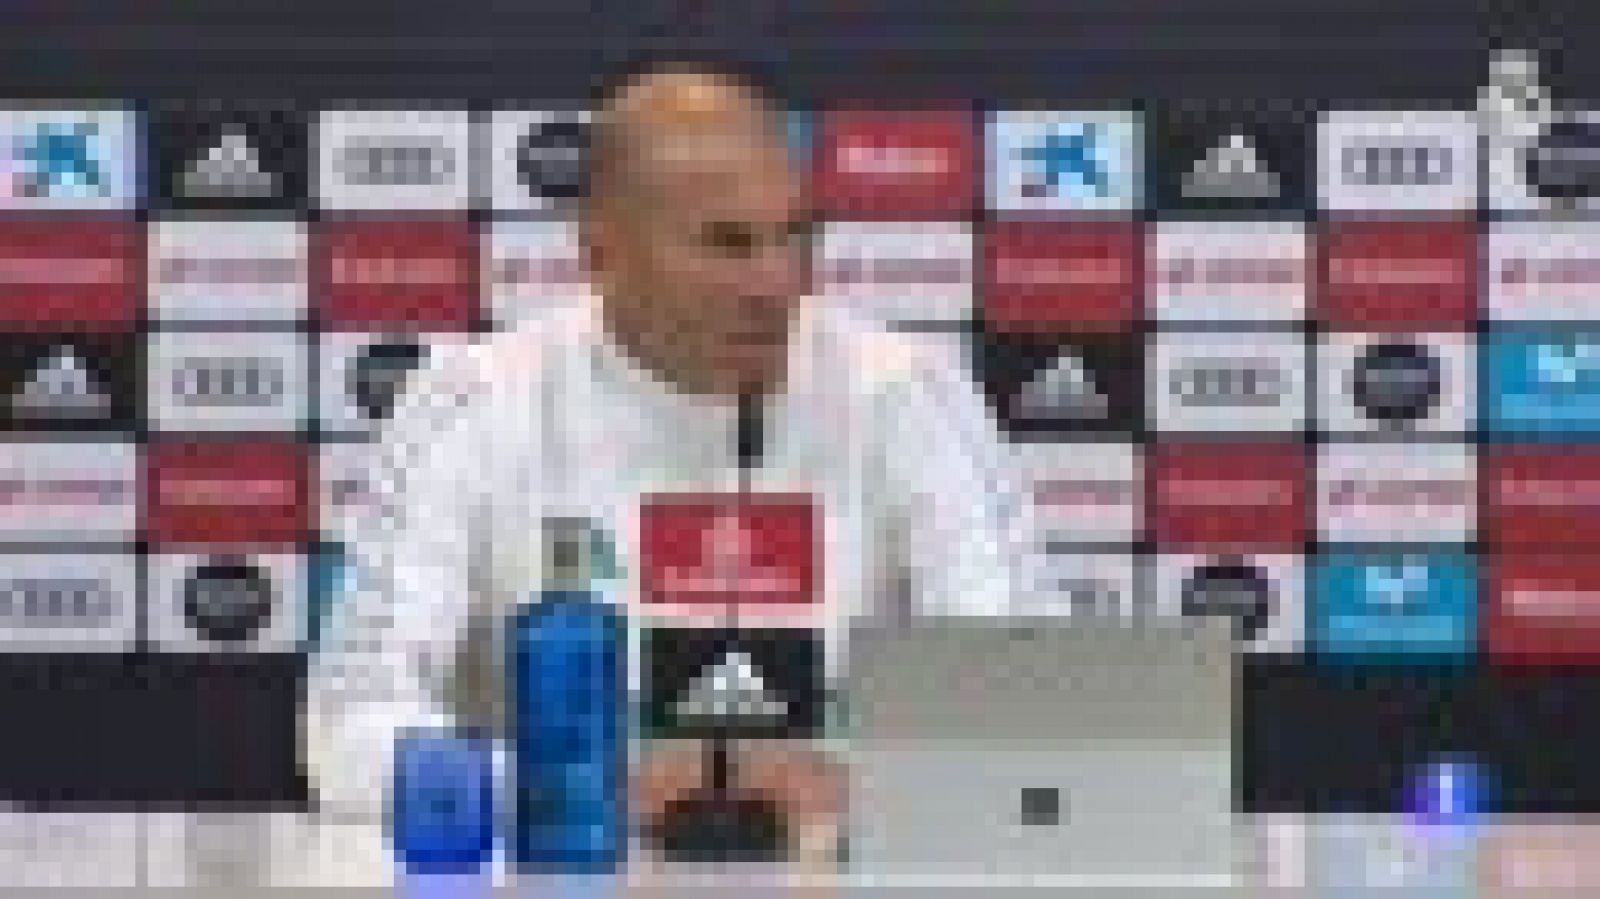 Telediario 1: Zidane: "Voy a defender a muerte a mi plantilla" | RTVE Play